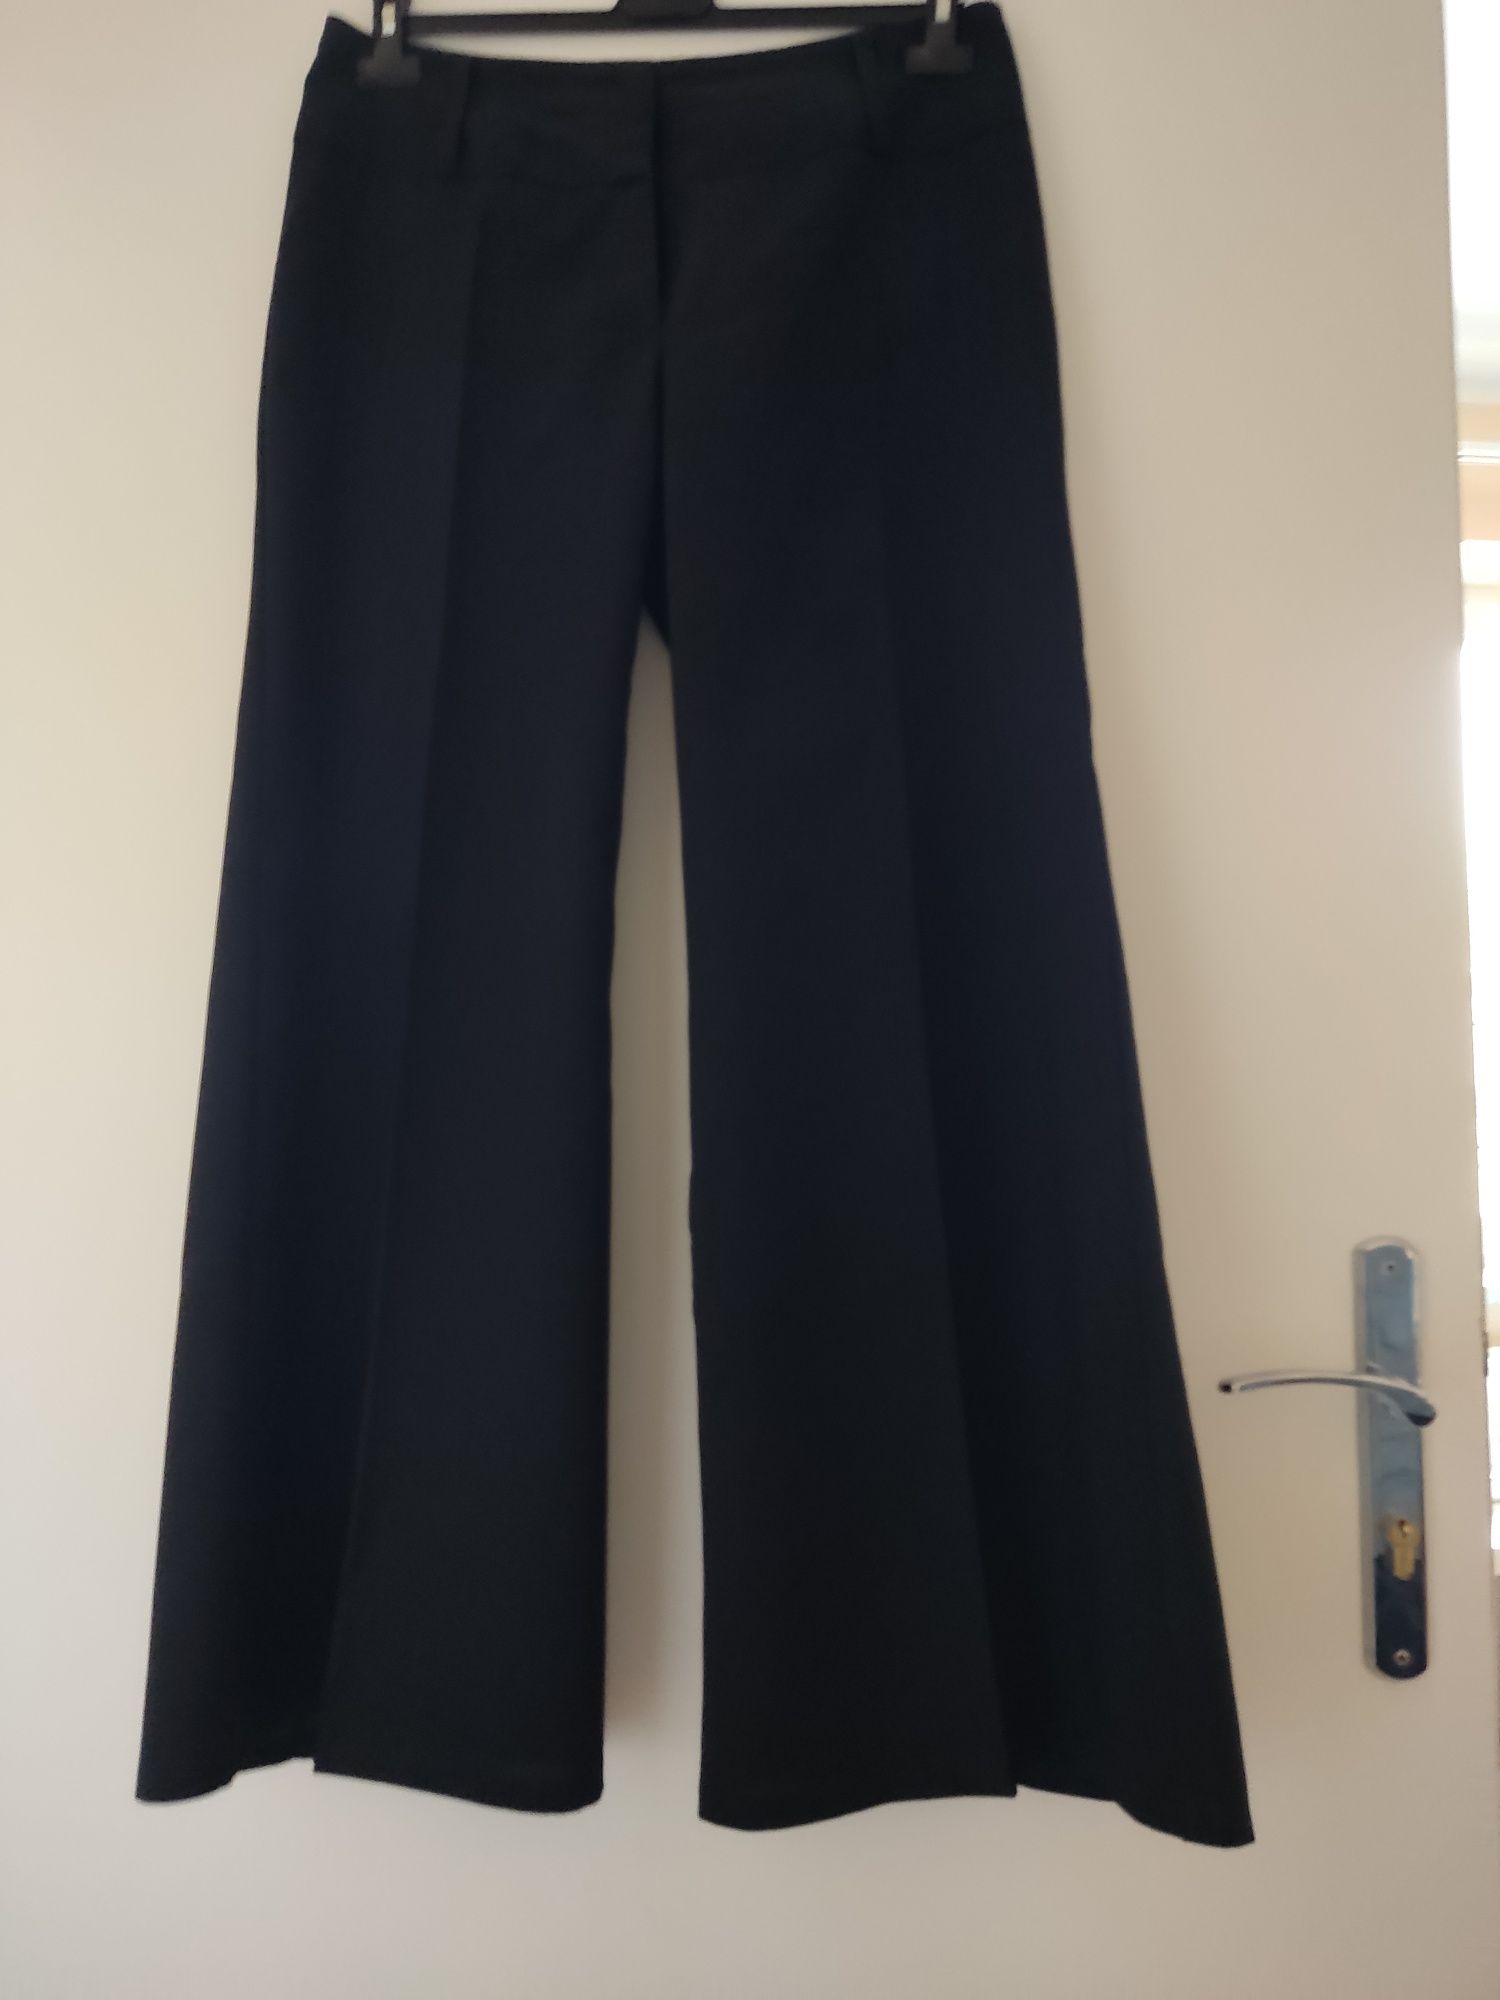 Spodnie damskie eleganckie M/L, szerokie,cienki poliester,z Francji